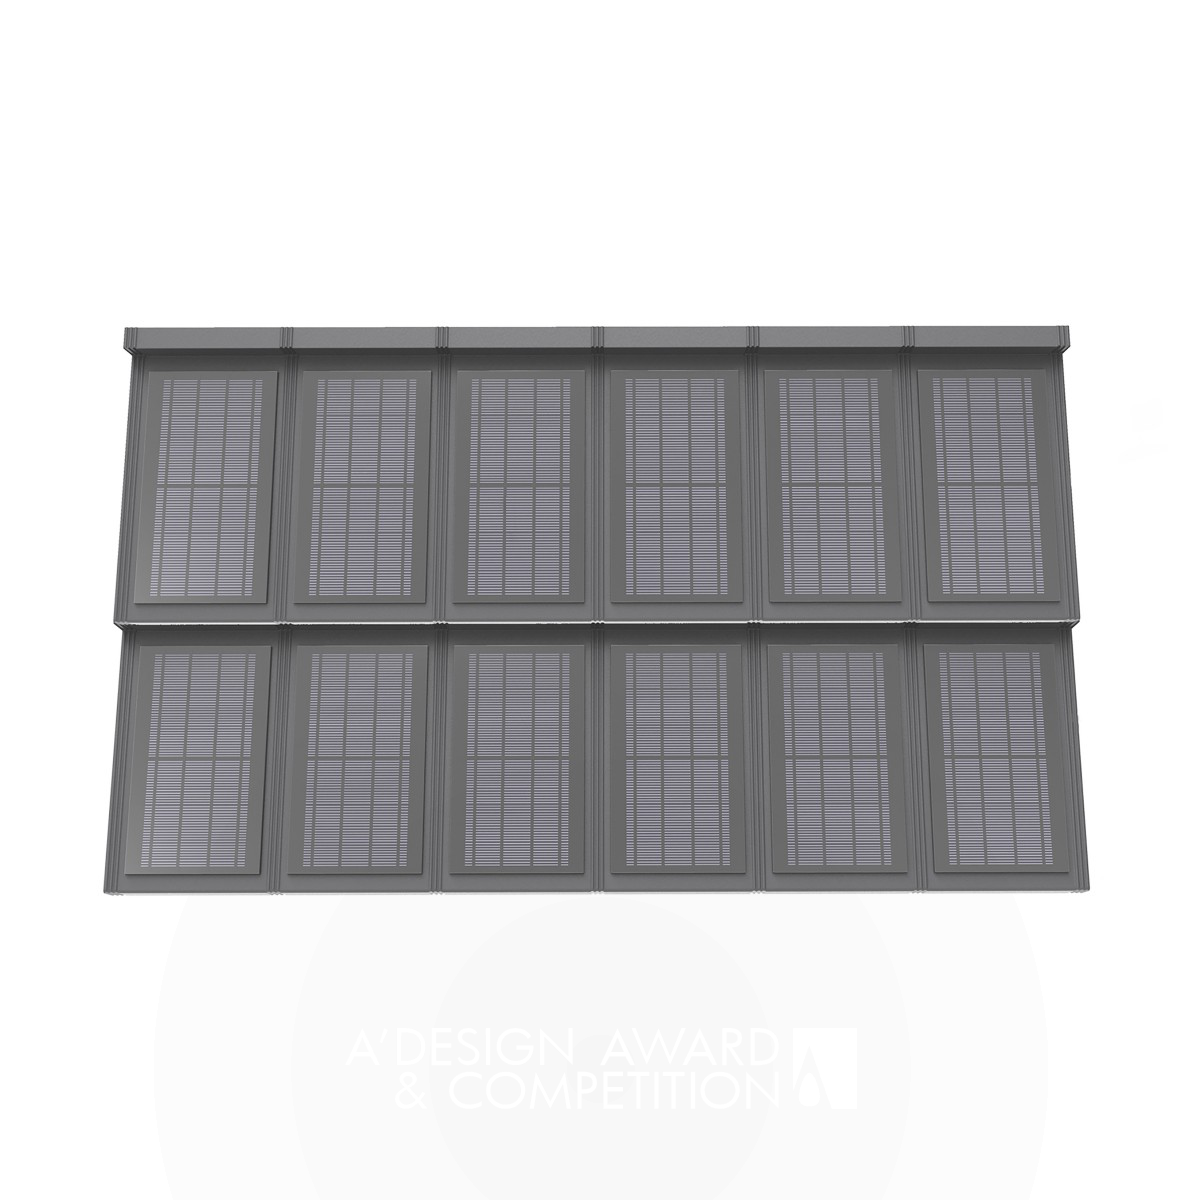 Etile <b>Photovoltaic Metal Roof 